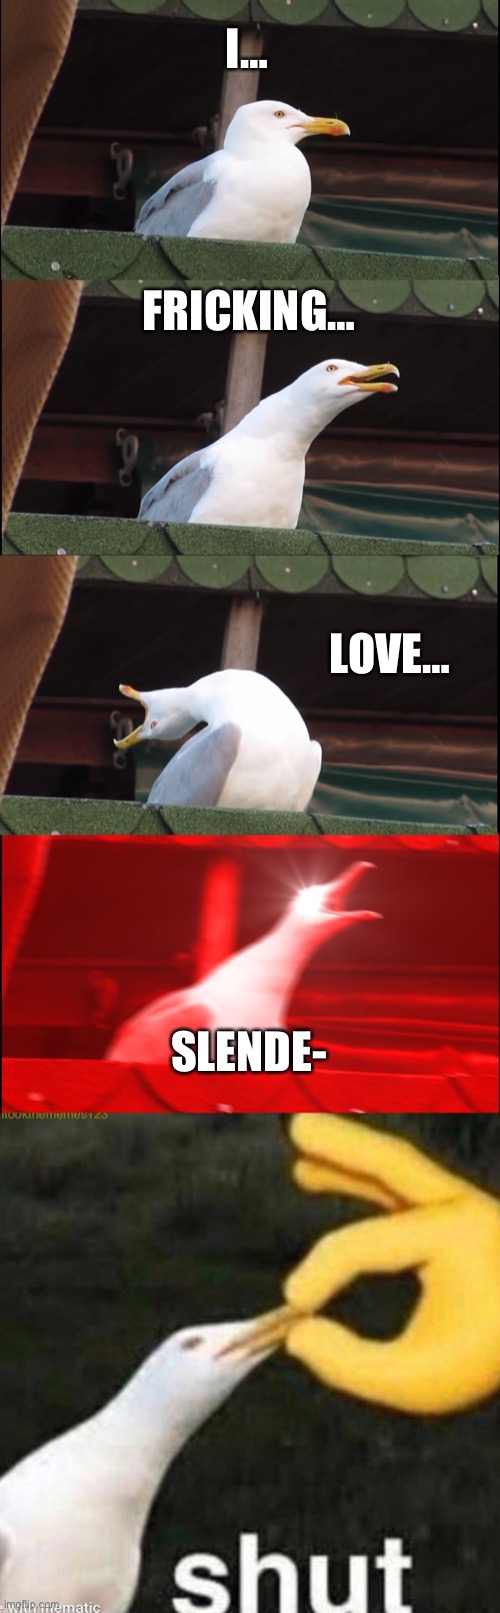 XDDDDDDDDD | I…; FRICKING…; LOVE…; SLENDE- | image tagged in memes,inhaling seagull | made w/ Imgflip meme maker